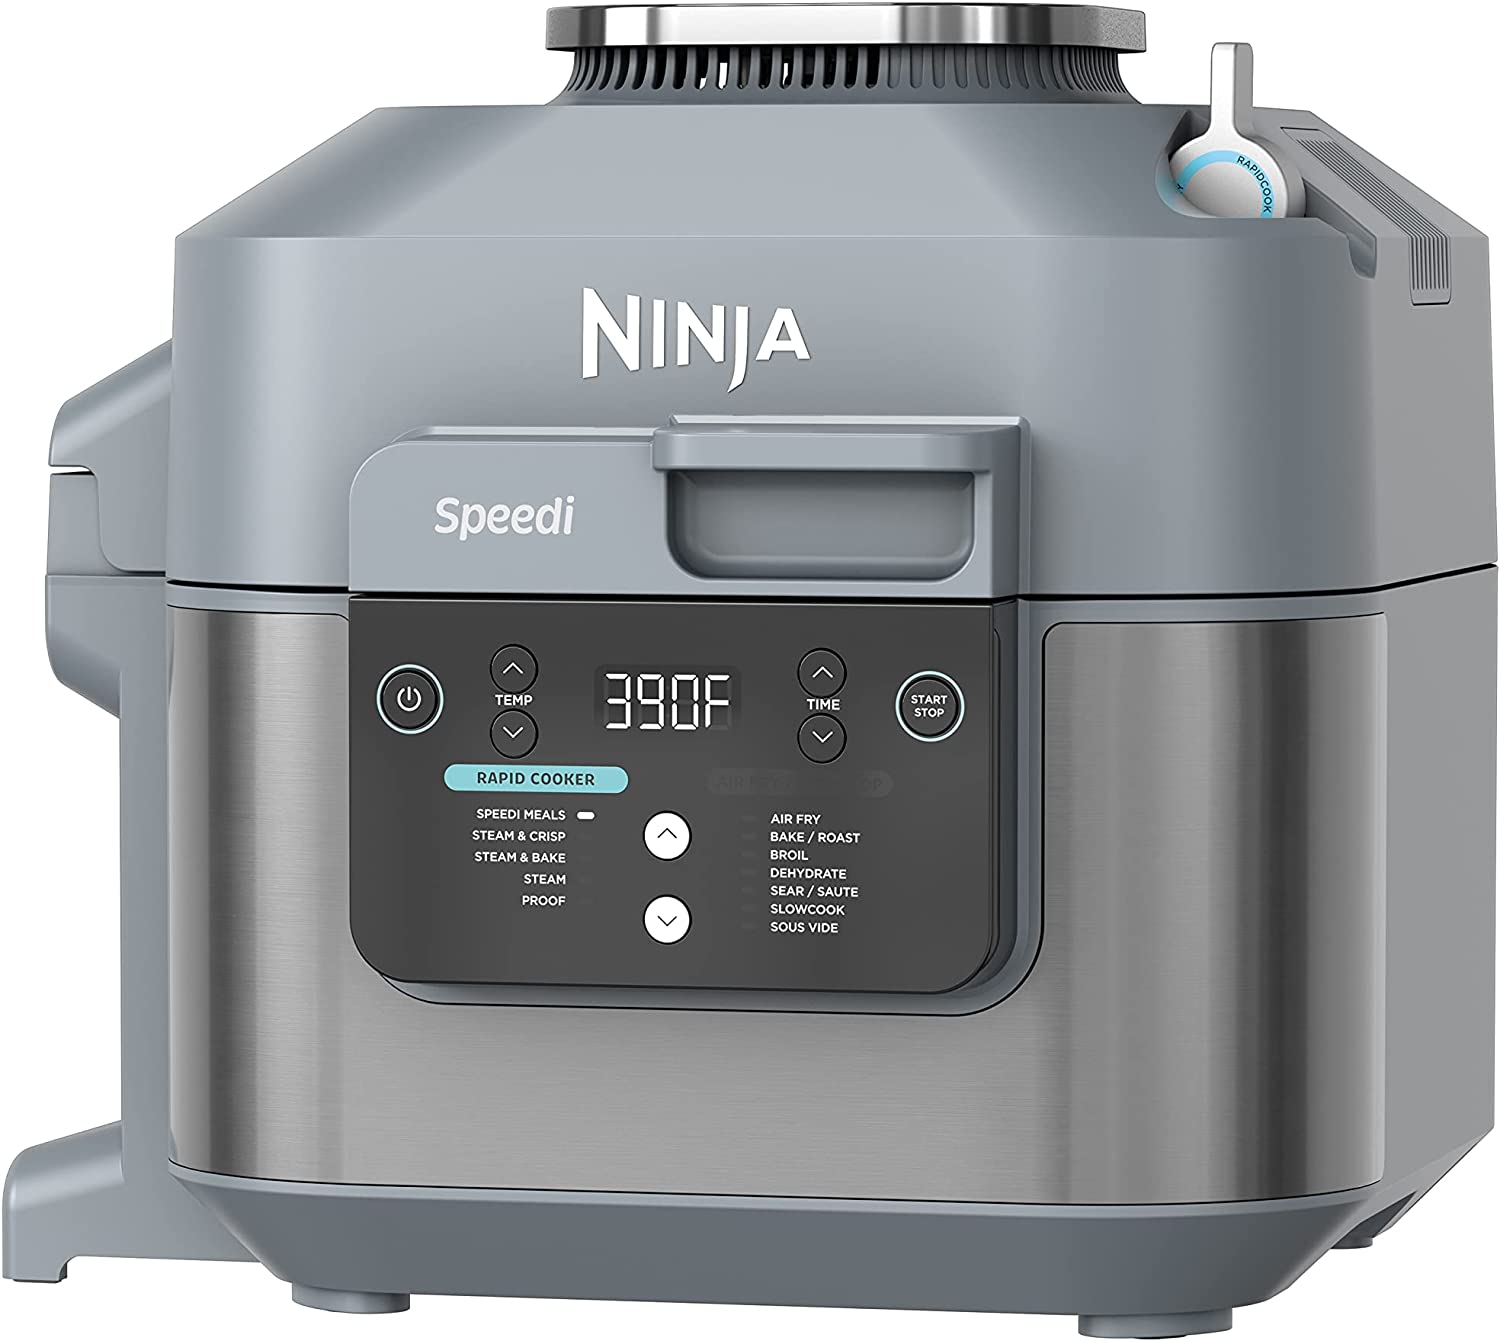 Review of Ninja SF301 Speedi Rapid Cooker & Air Fryer